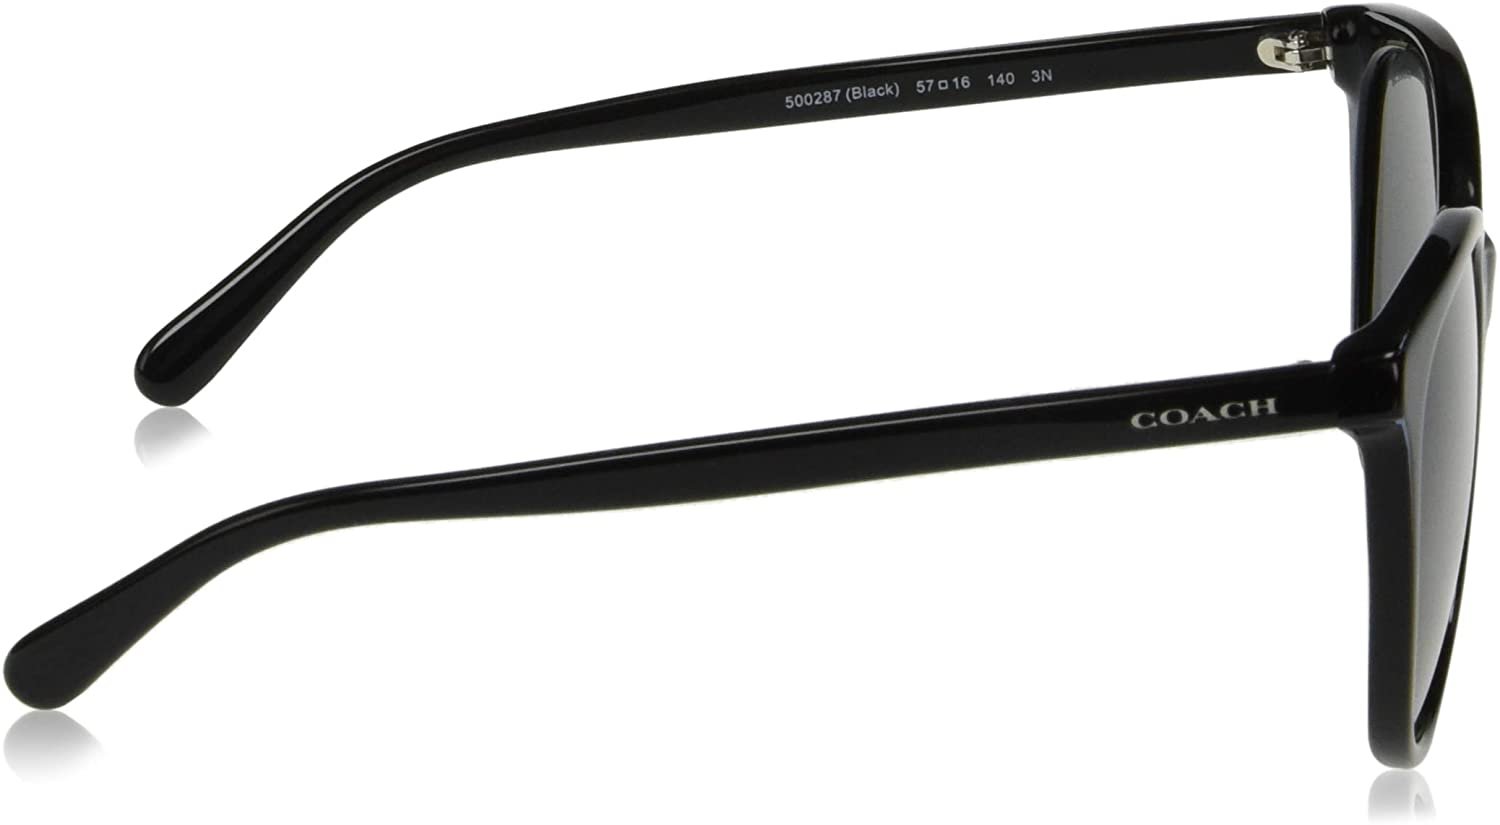 Sunglasses Coach HC 8271 U 500287 Black - image 3 of 4